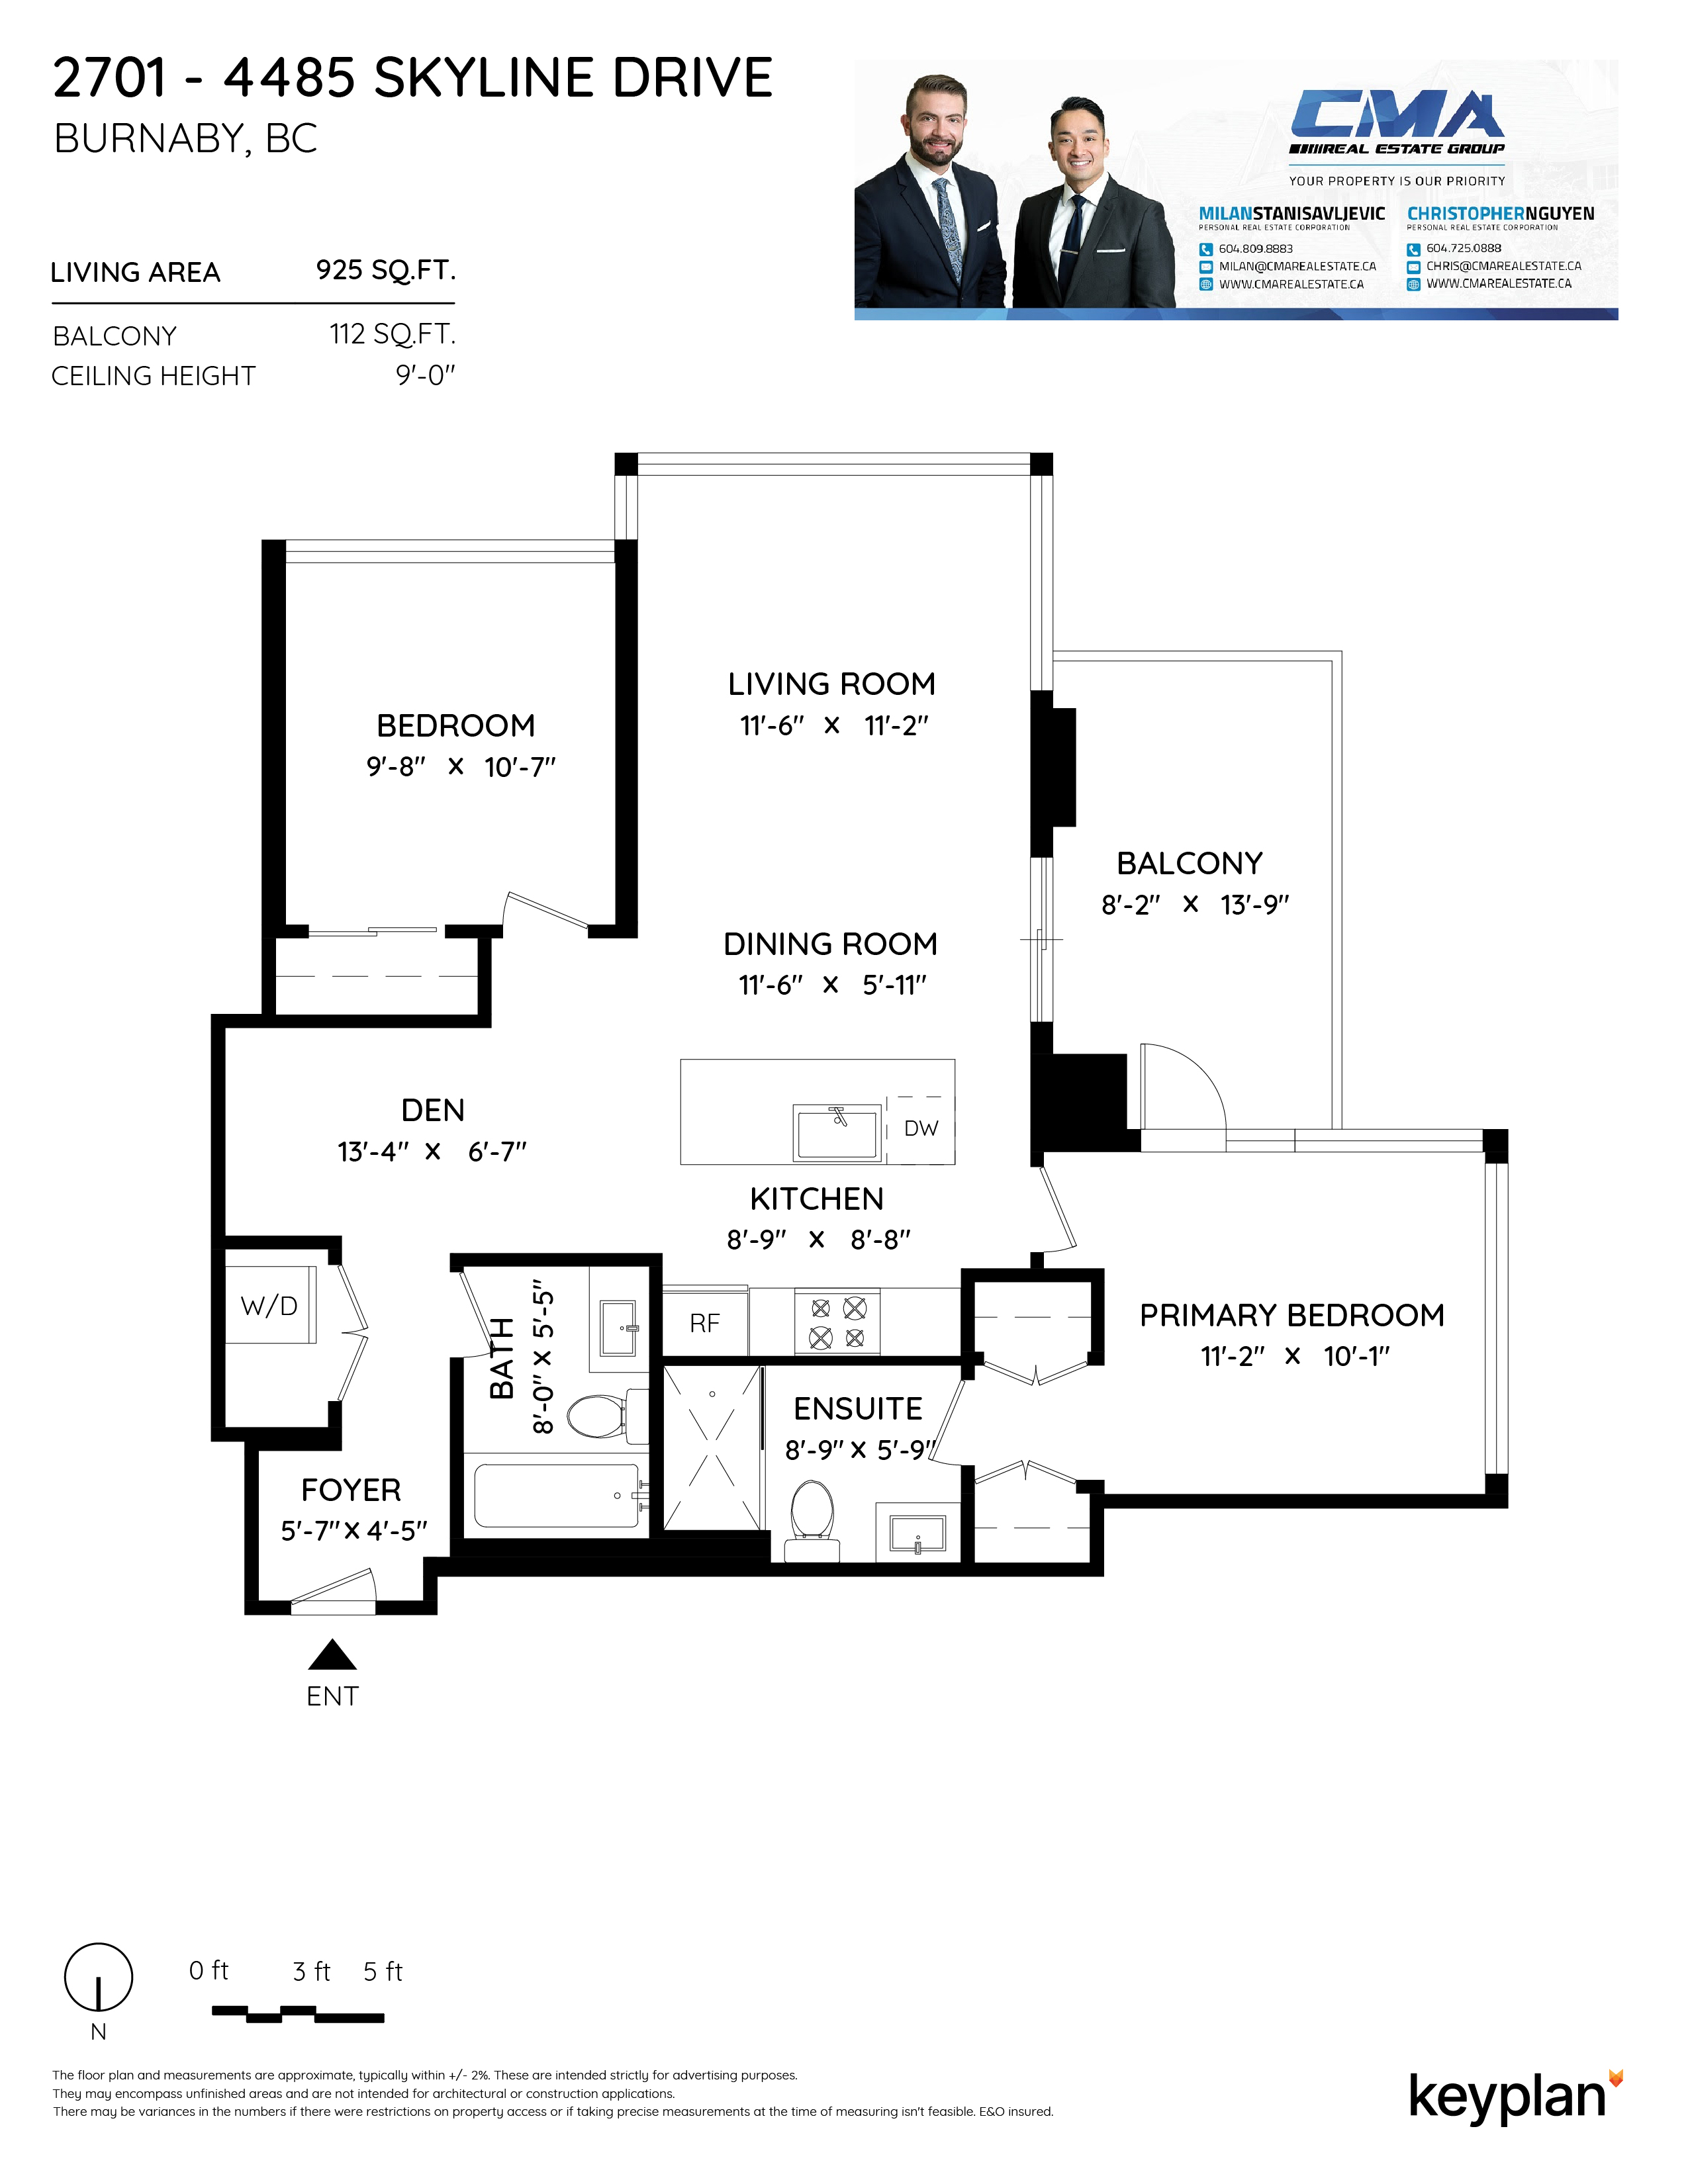 CMA Real Estate Group - Unit 2701 - 4485 Skyline Drive, Burnaby, BC, Canada | Floor Plan 1